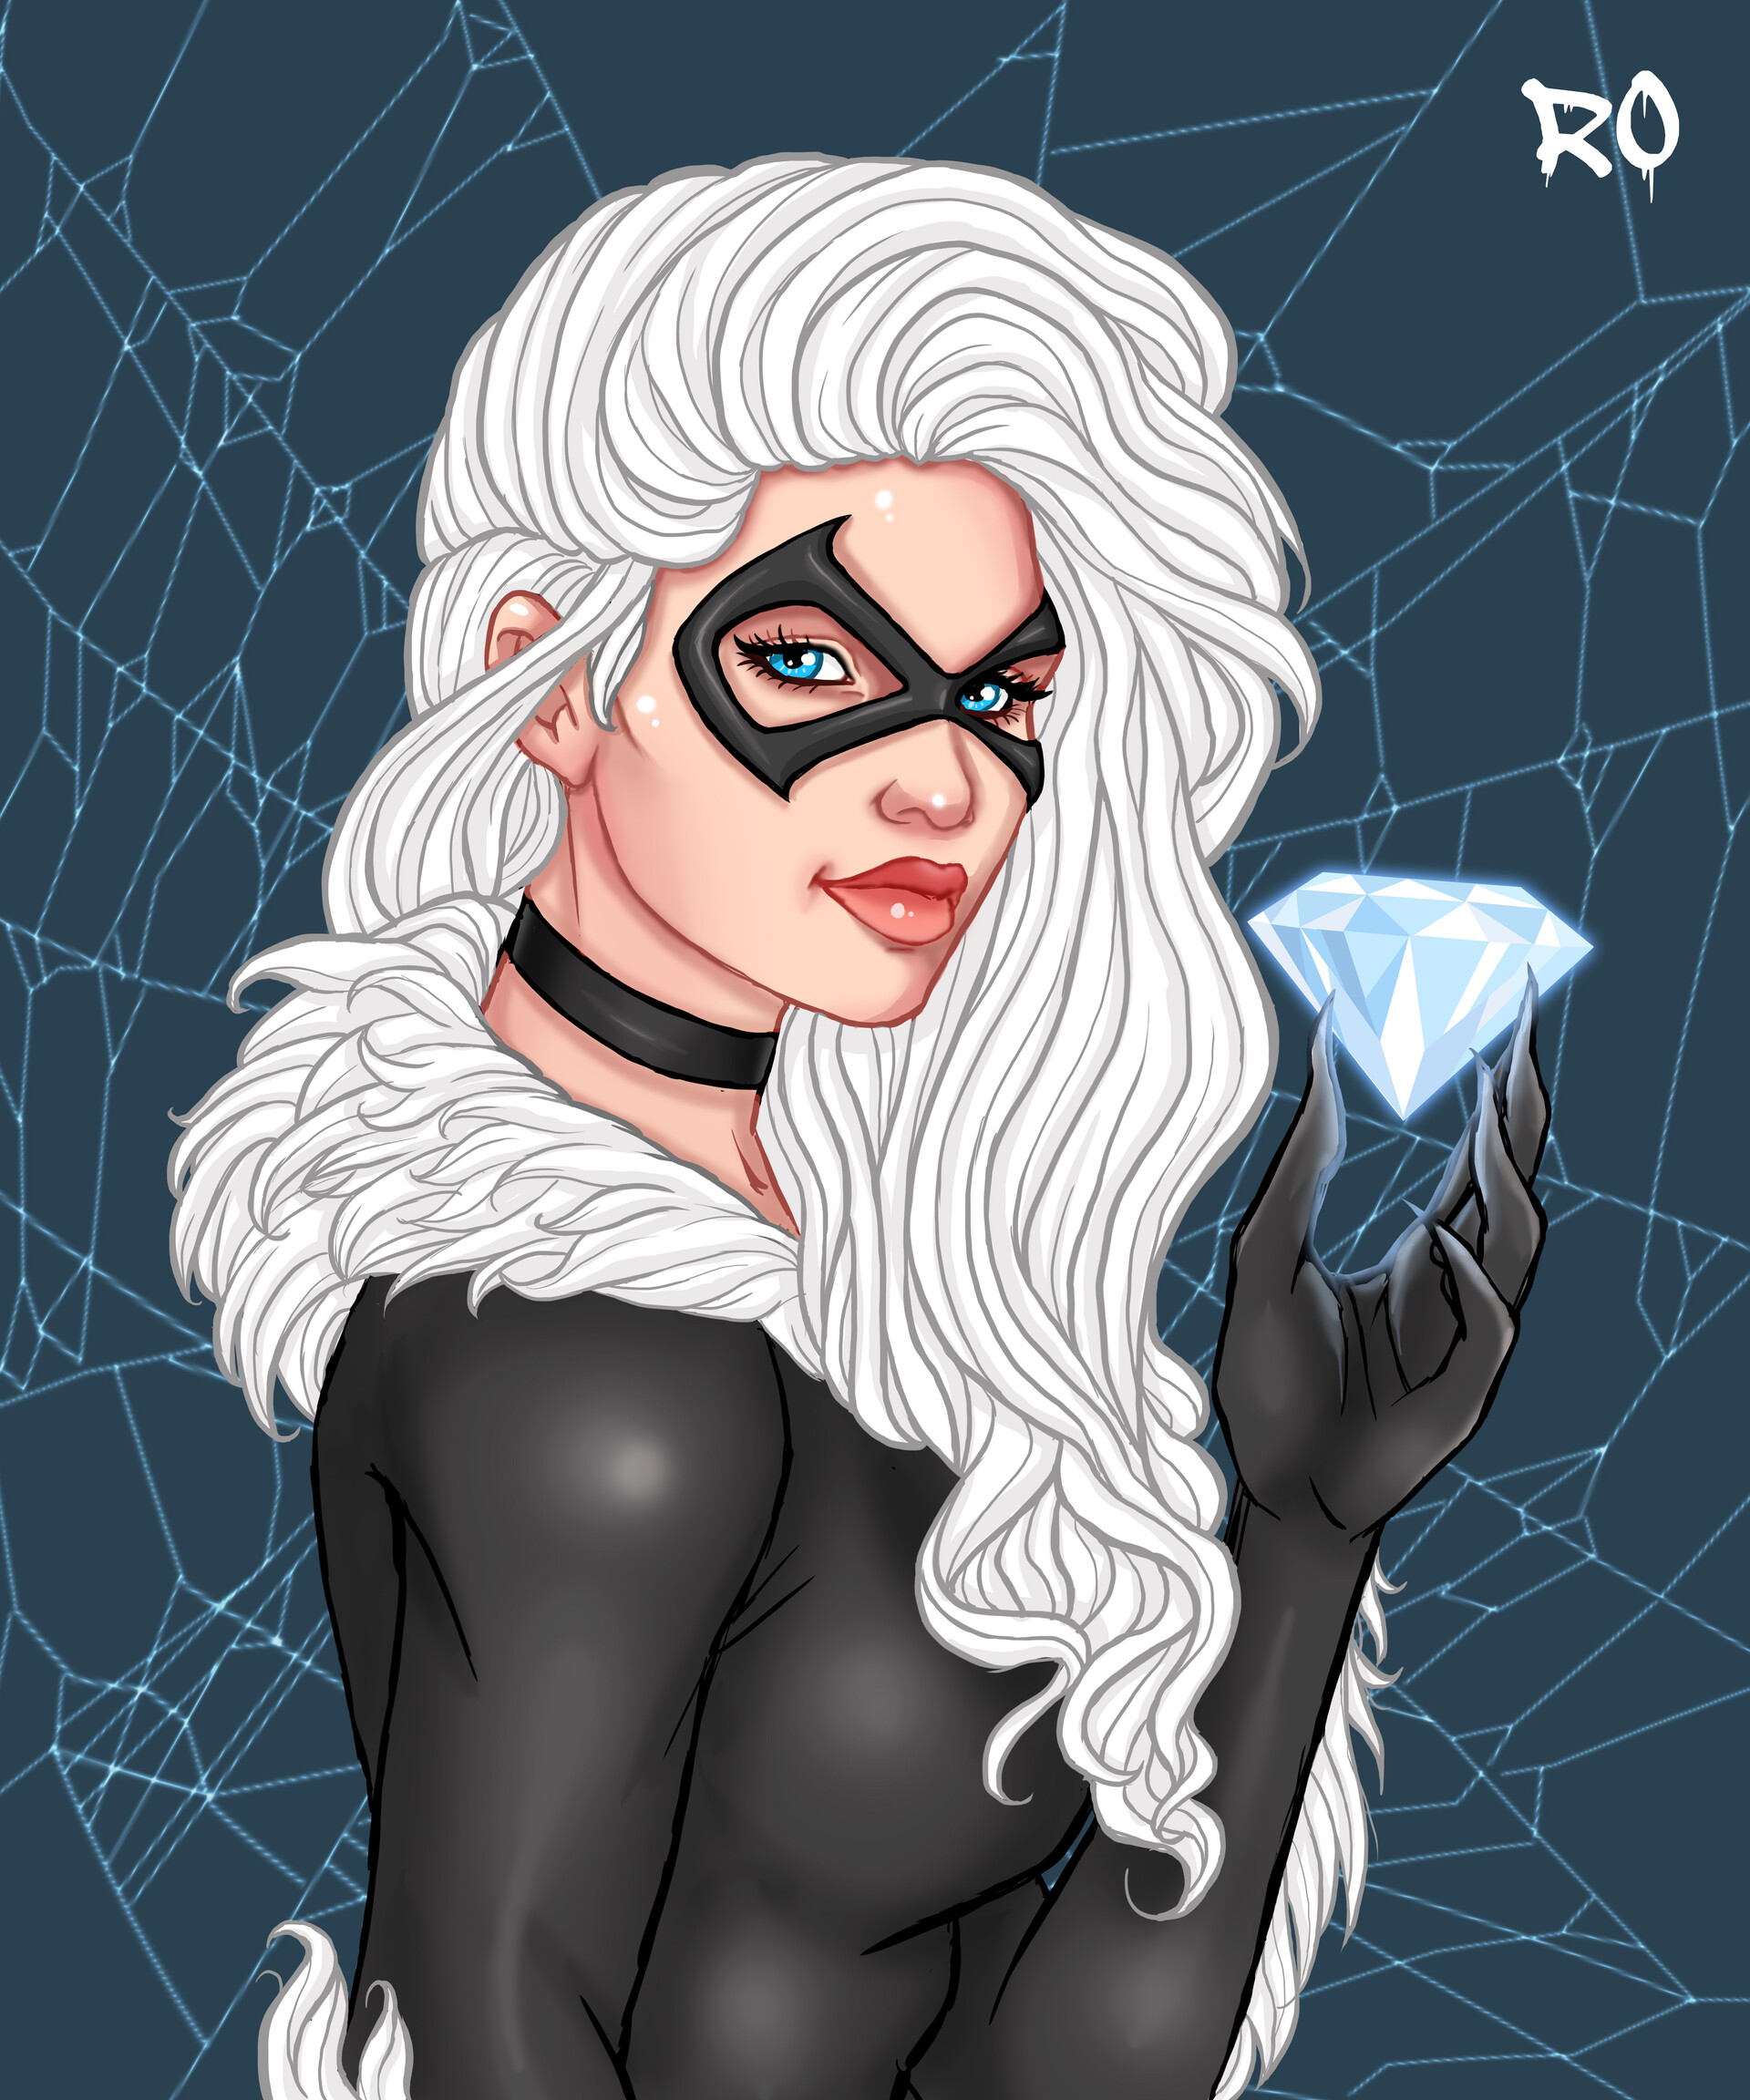 Black Cat - Marvel Universe Character - Fan Art Done in Adobe Photoshop 201...